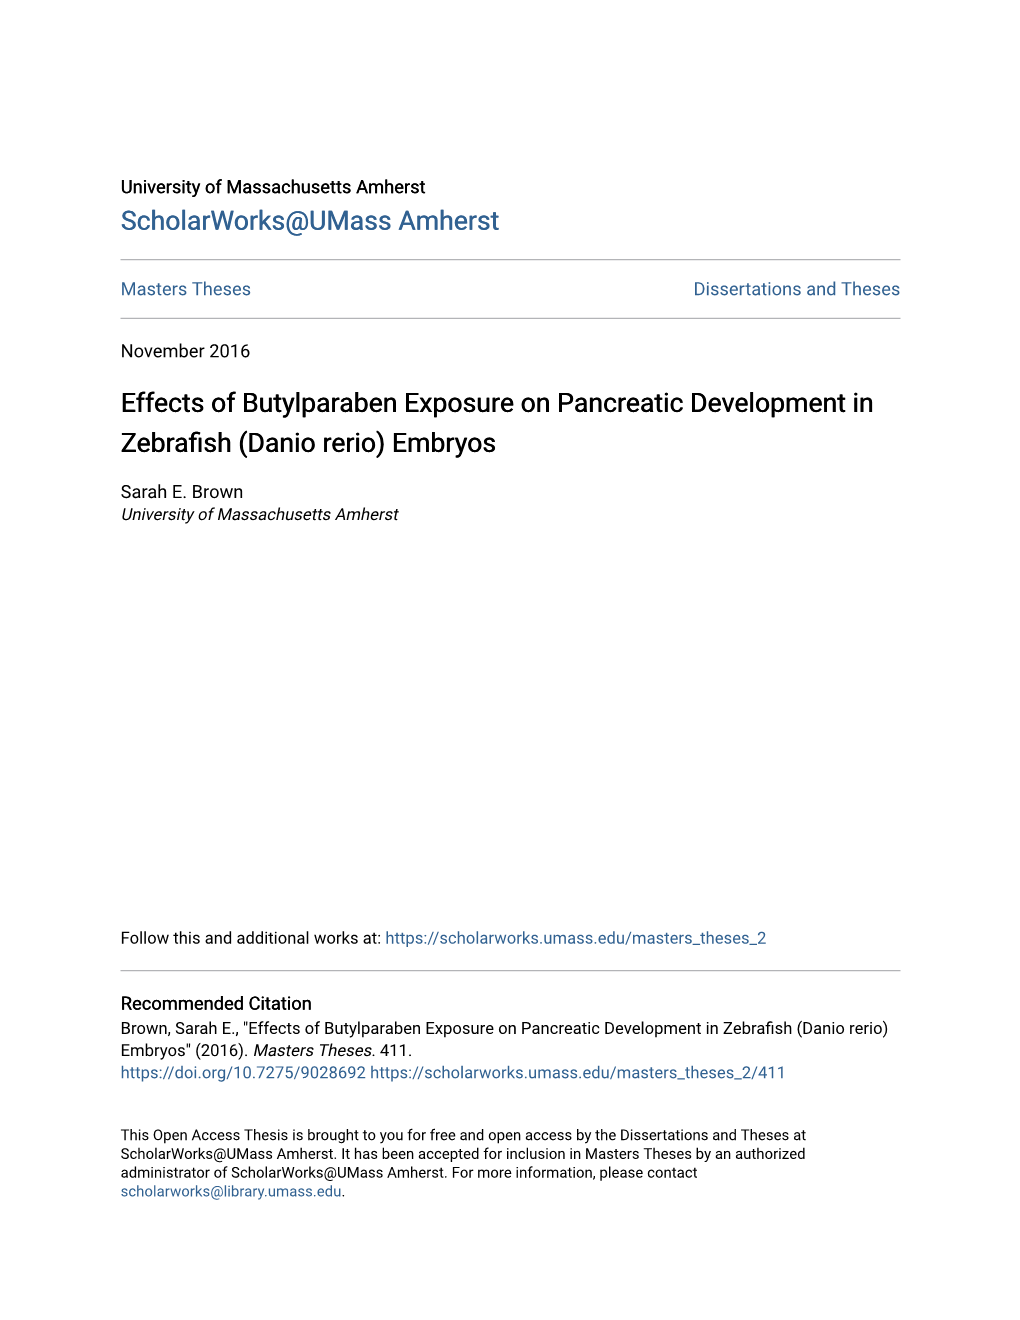 Effects of Butylparaben Exposure on Pancreatic Development in Zebrafish (Danio Erio)R Embryos